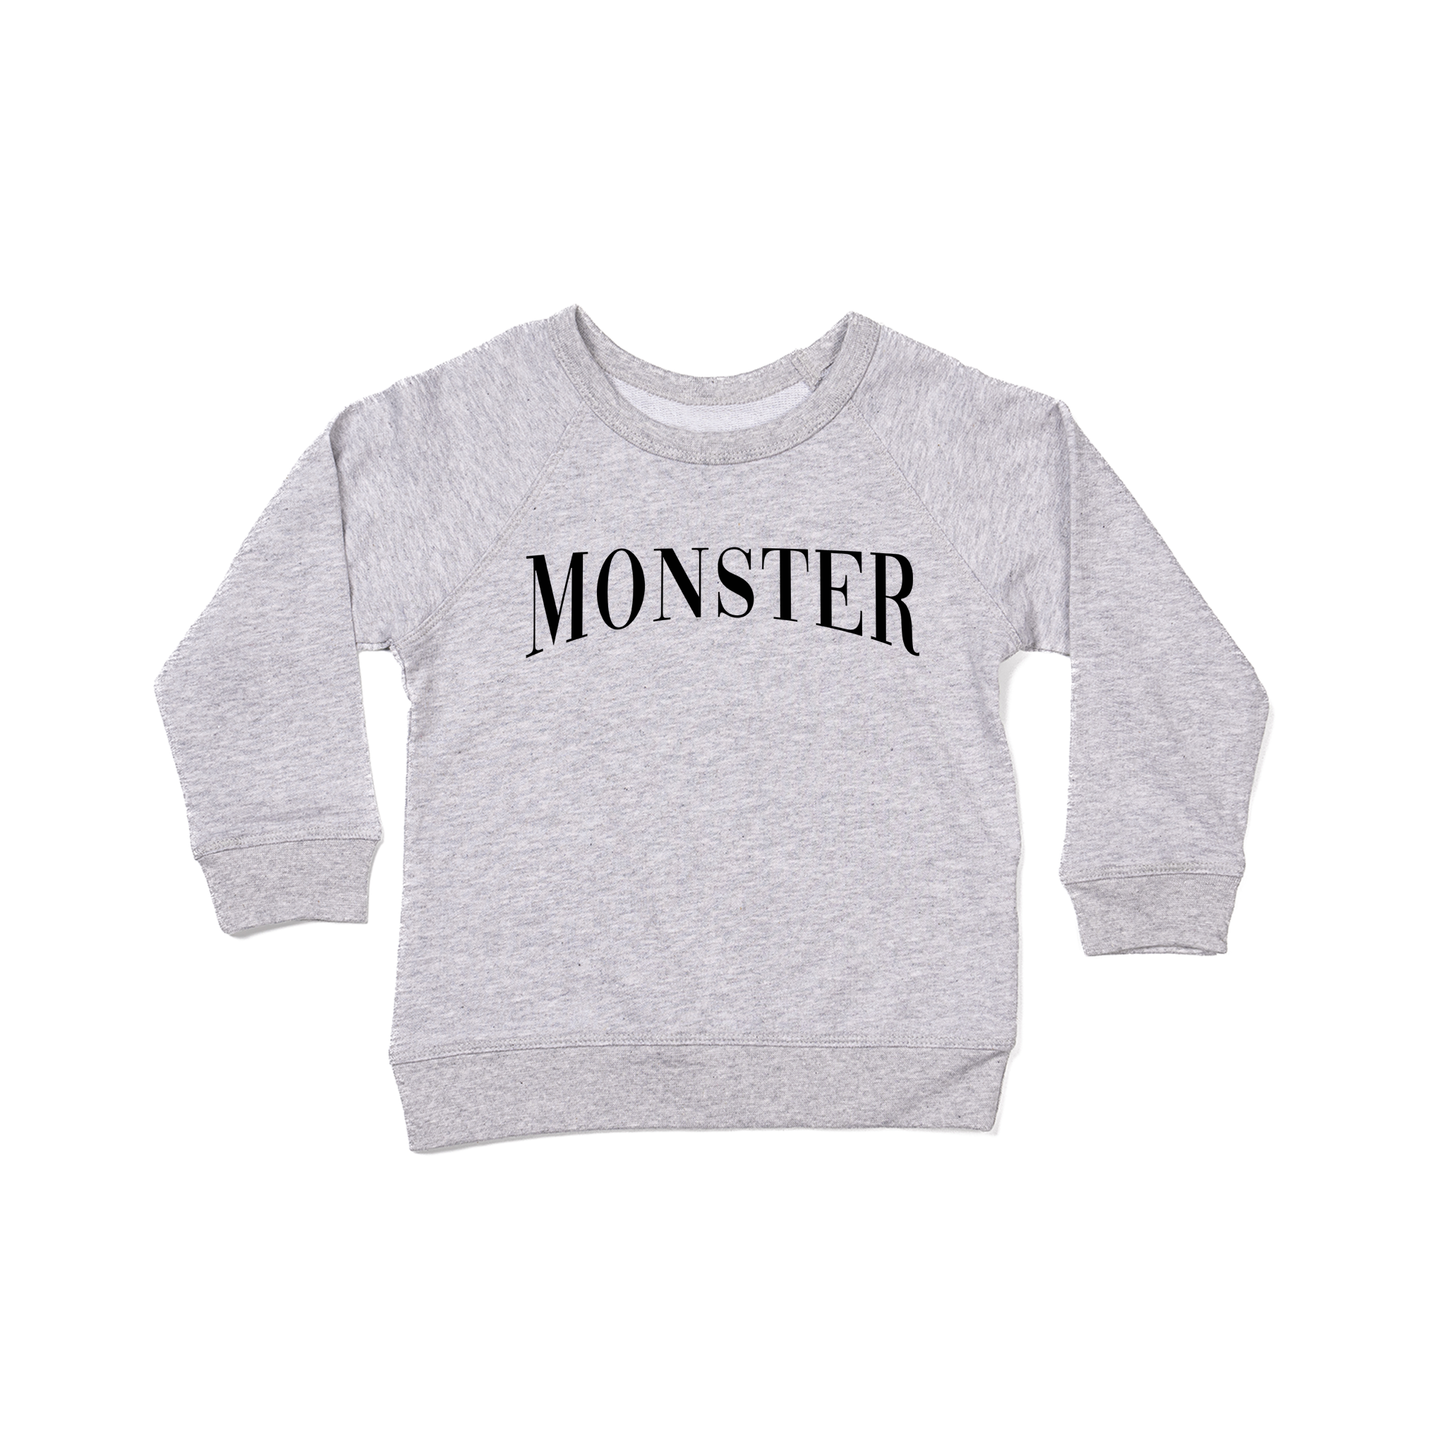 Monster (Black) - Kids Sweatshirt (Heather Gray)